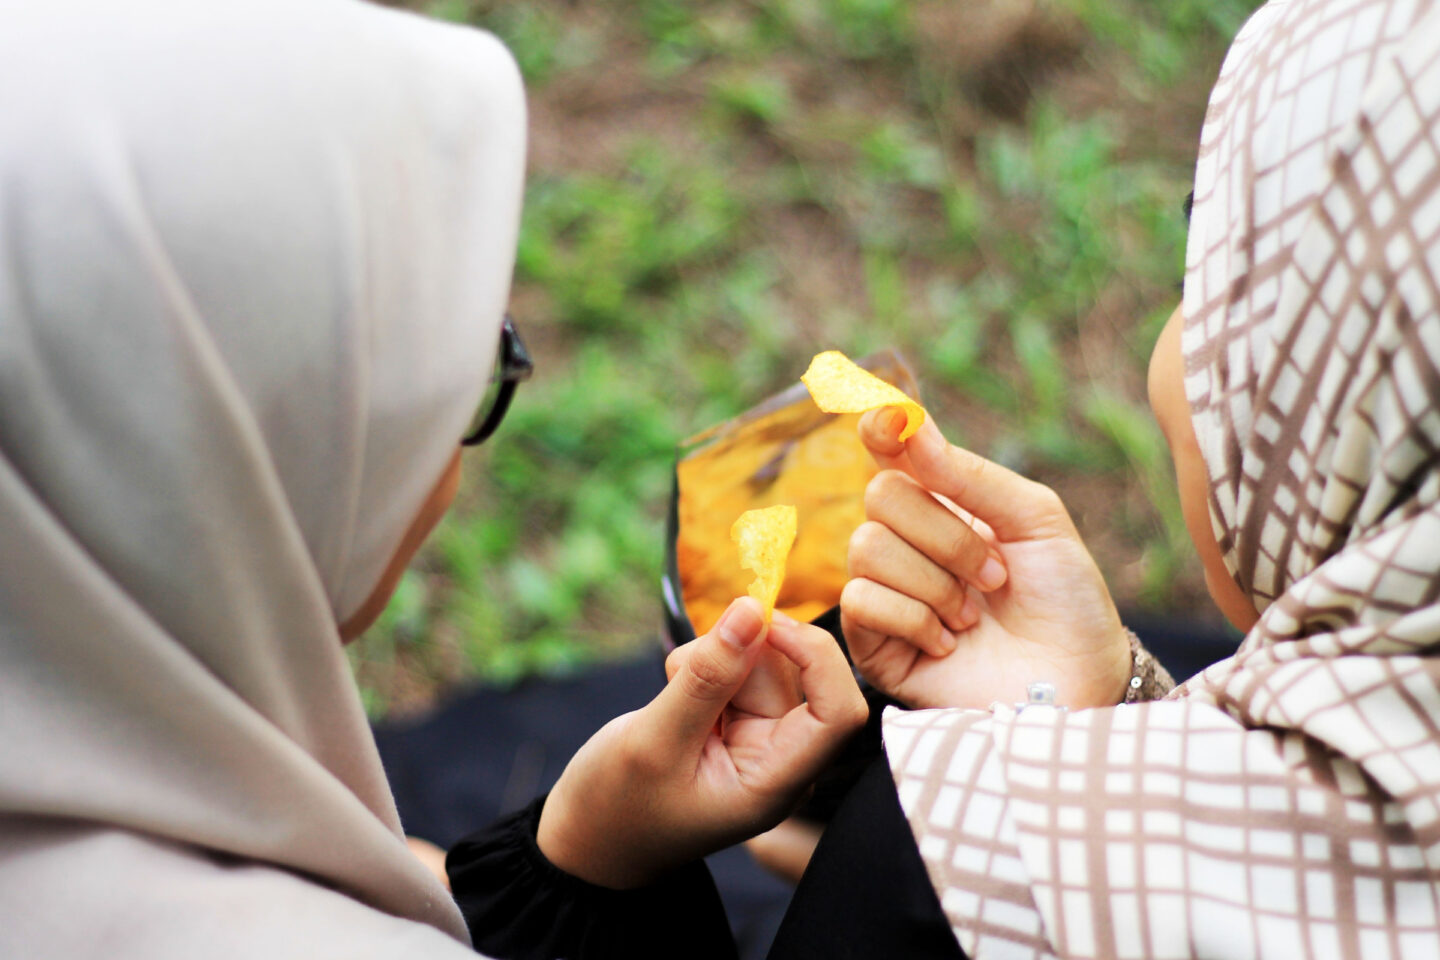 muslim women eating chips